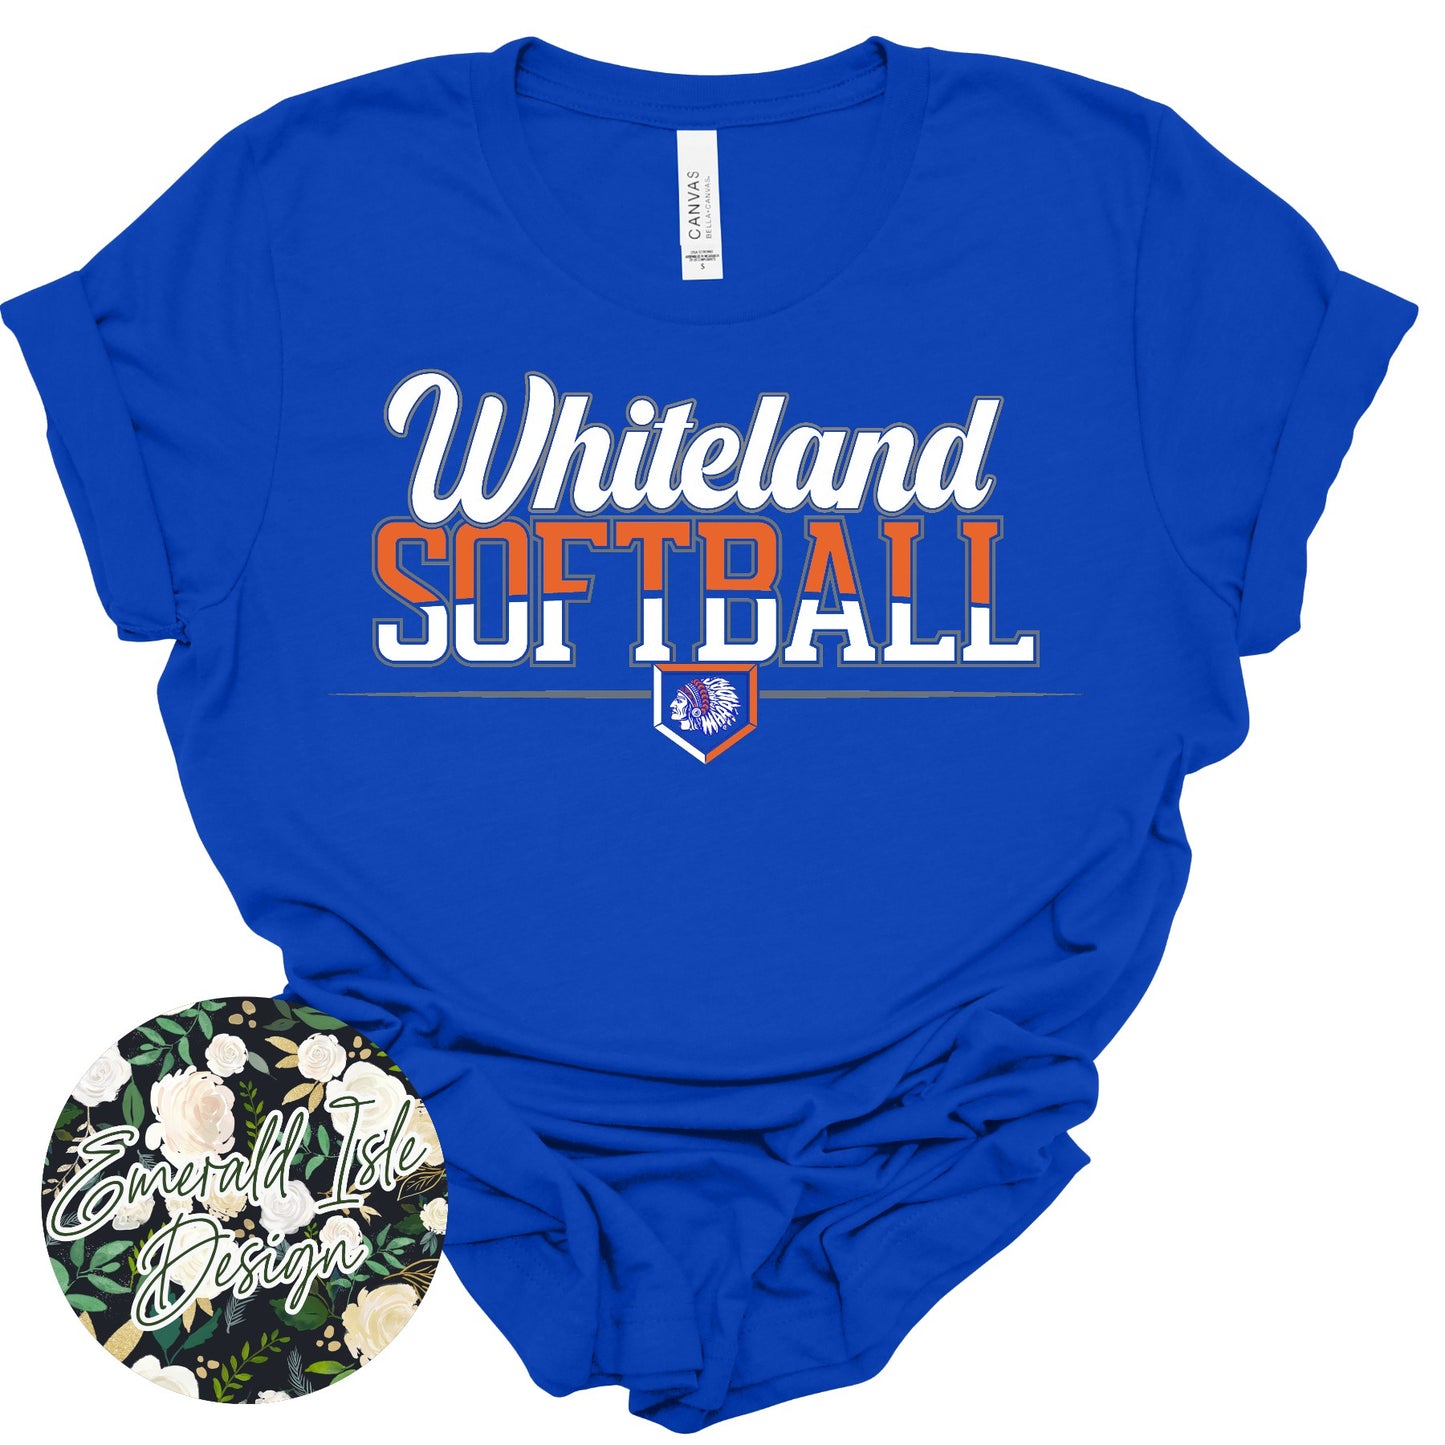 Whiteland Curved Softball Design